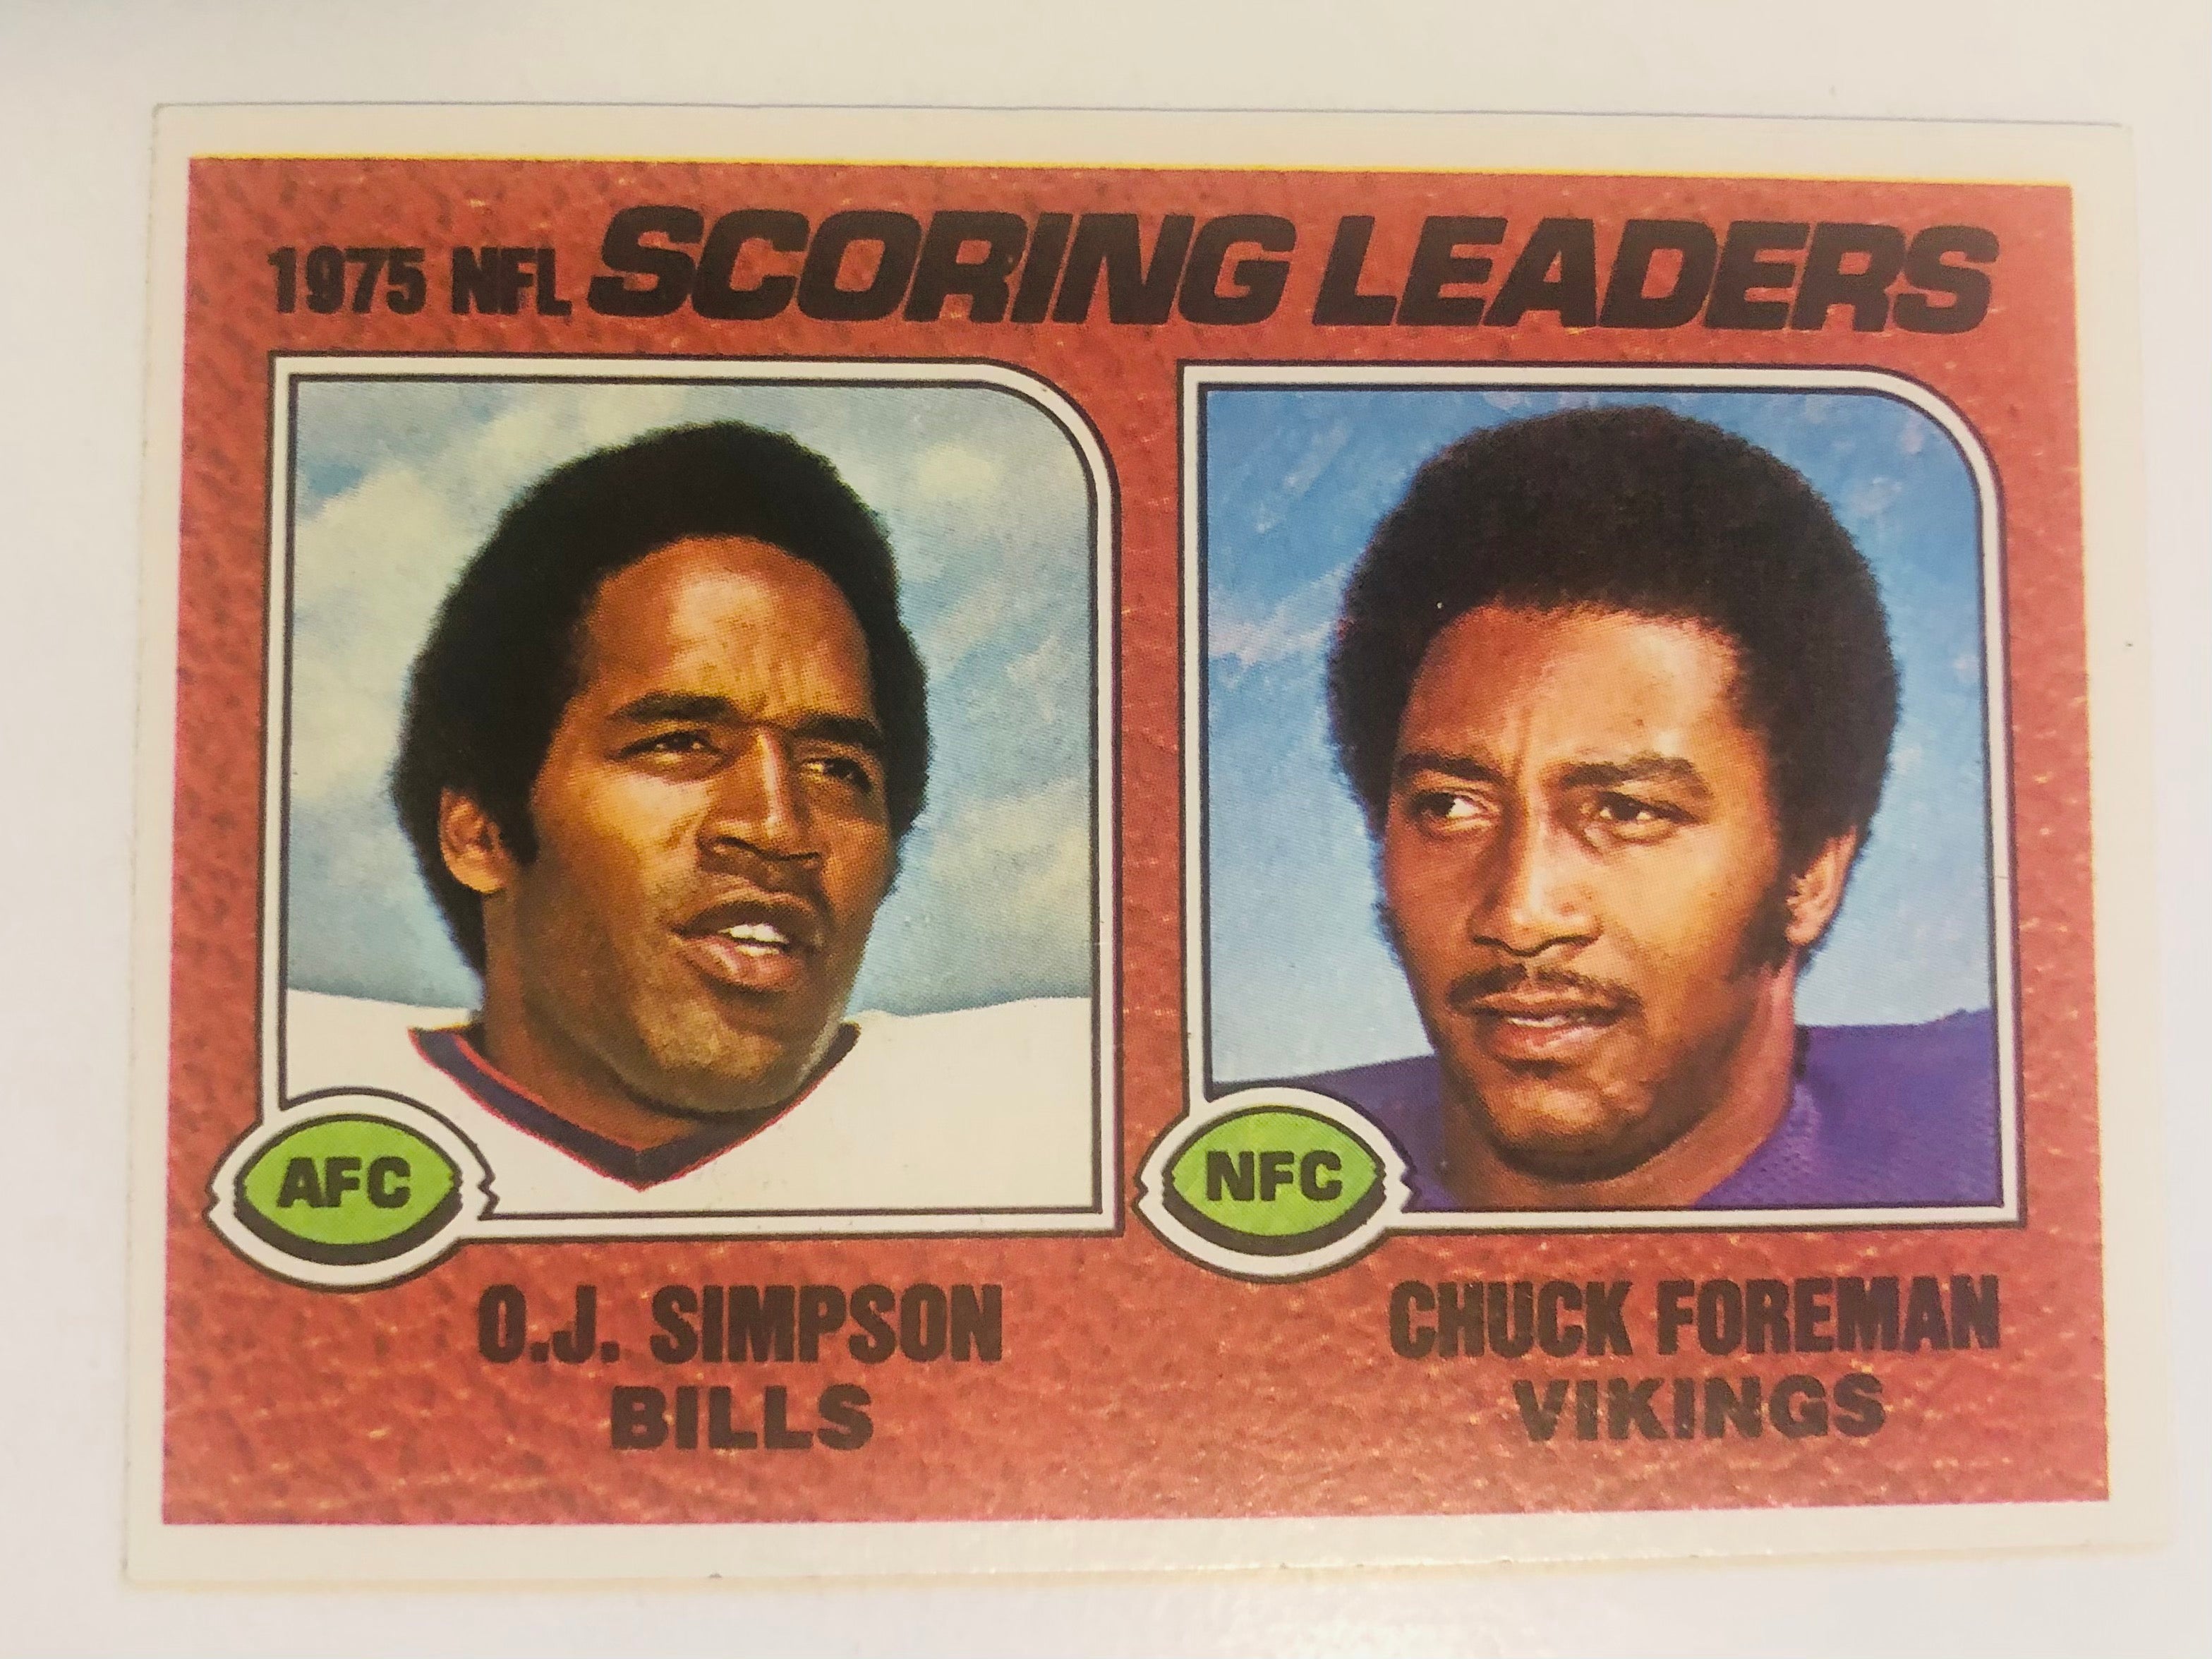 OJ Simpson Topps football scoring leader card 1976